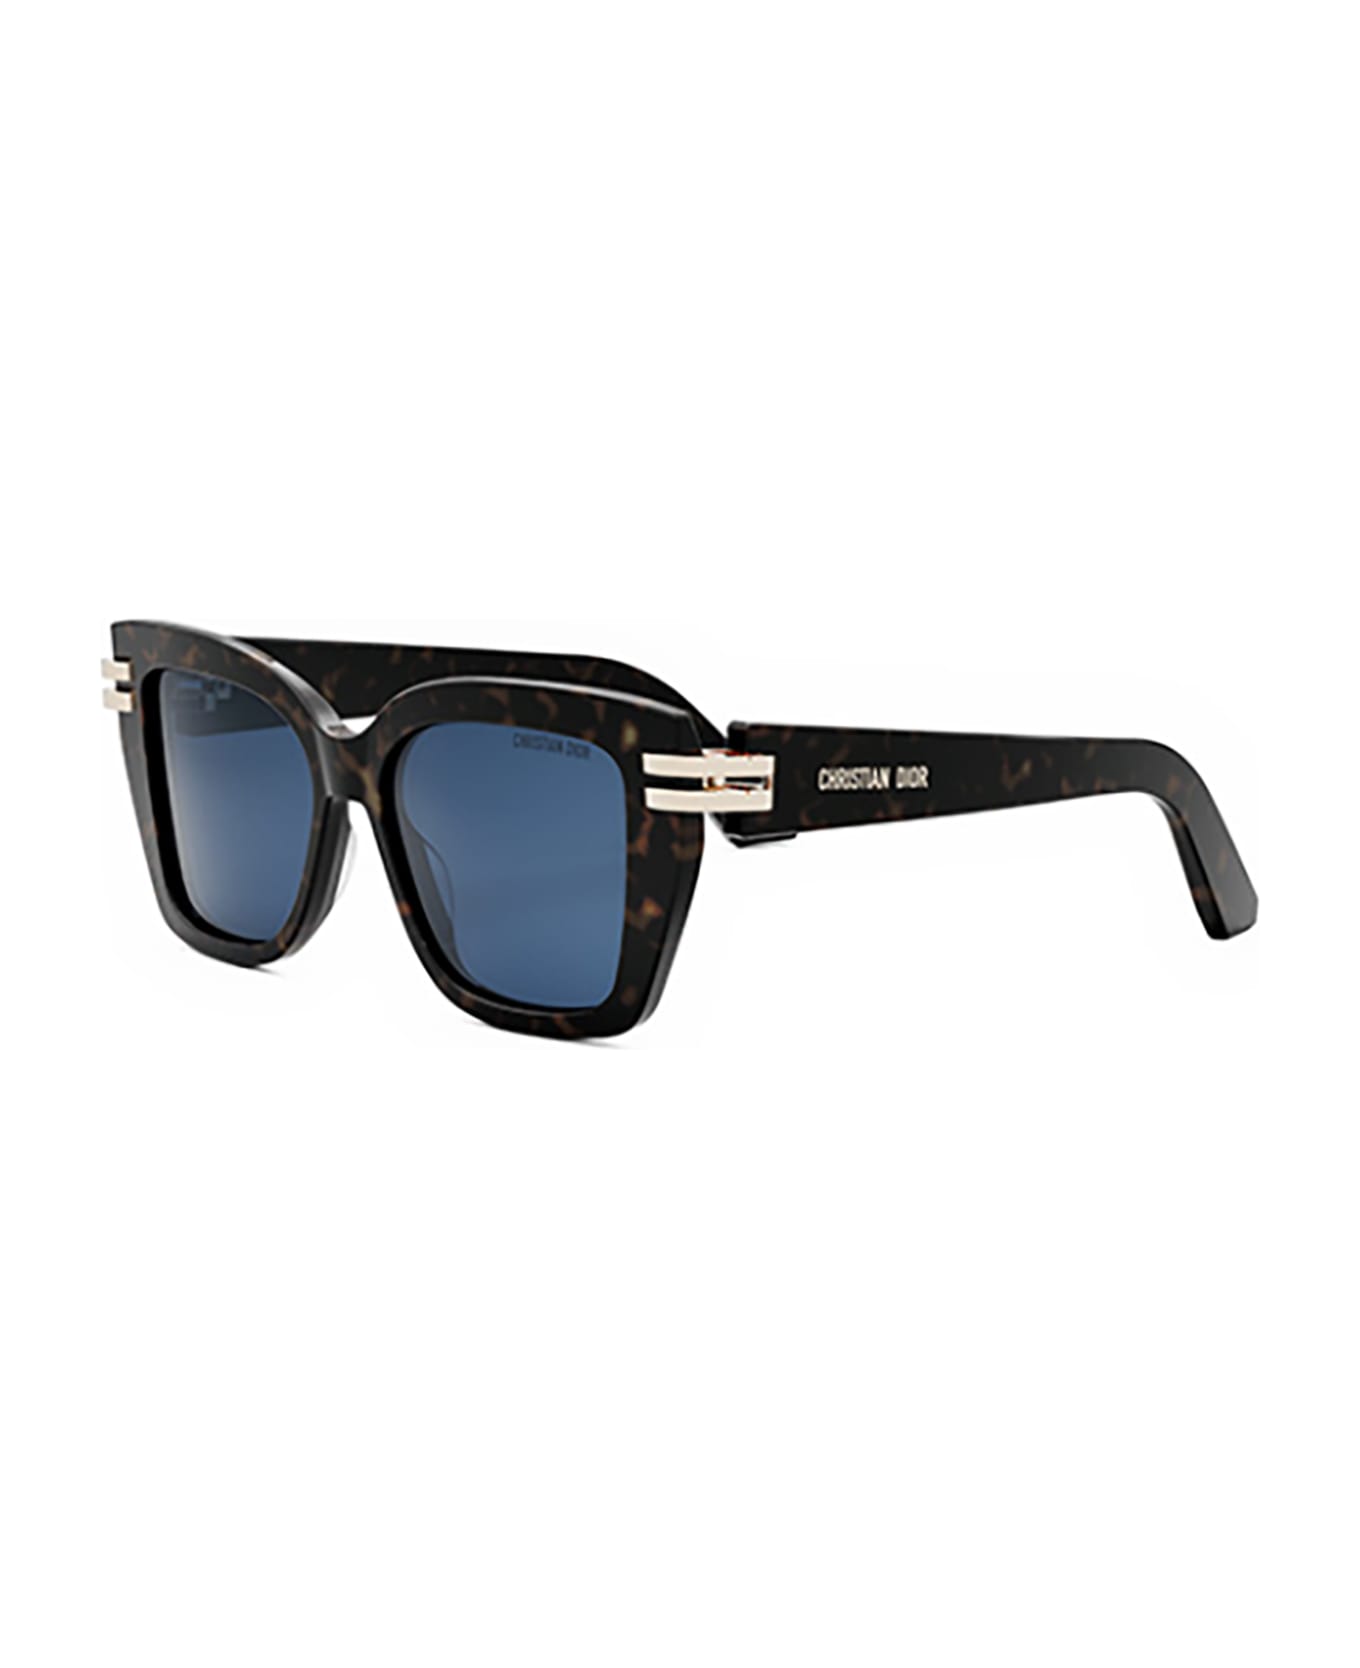 Dior CDIOR S1I Sunglasses サングラス